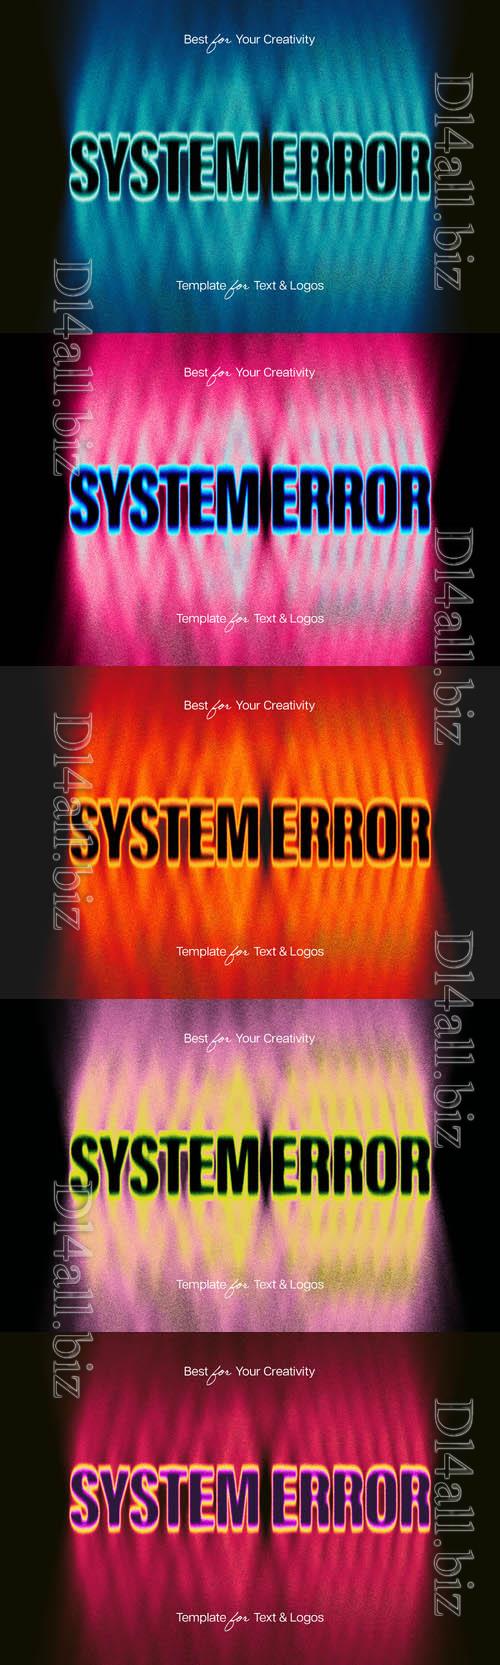 PSD vibrant system error, toxic, deformation  text effect